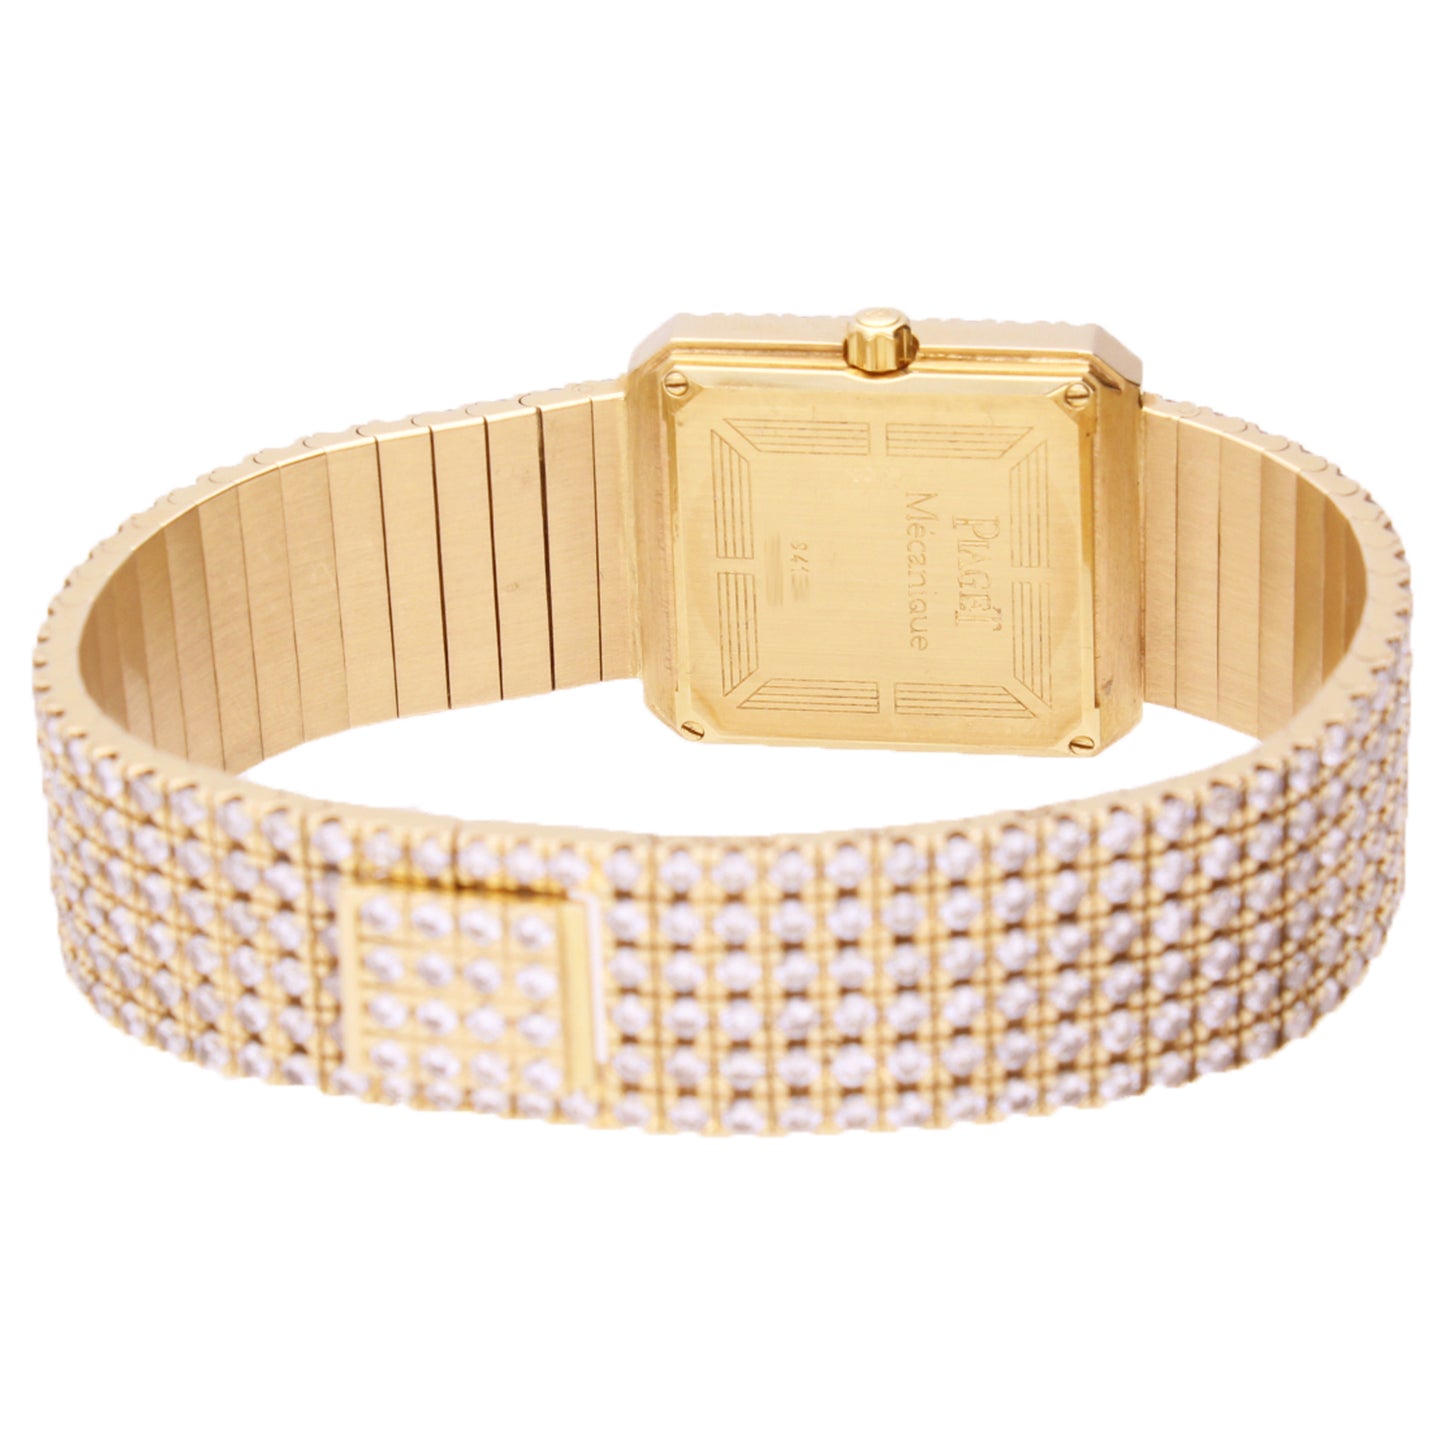 18ct yellow gold Piaget diamond set bracelet watch. Made 1990